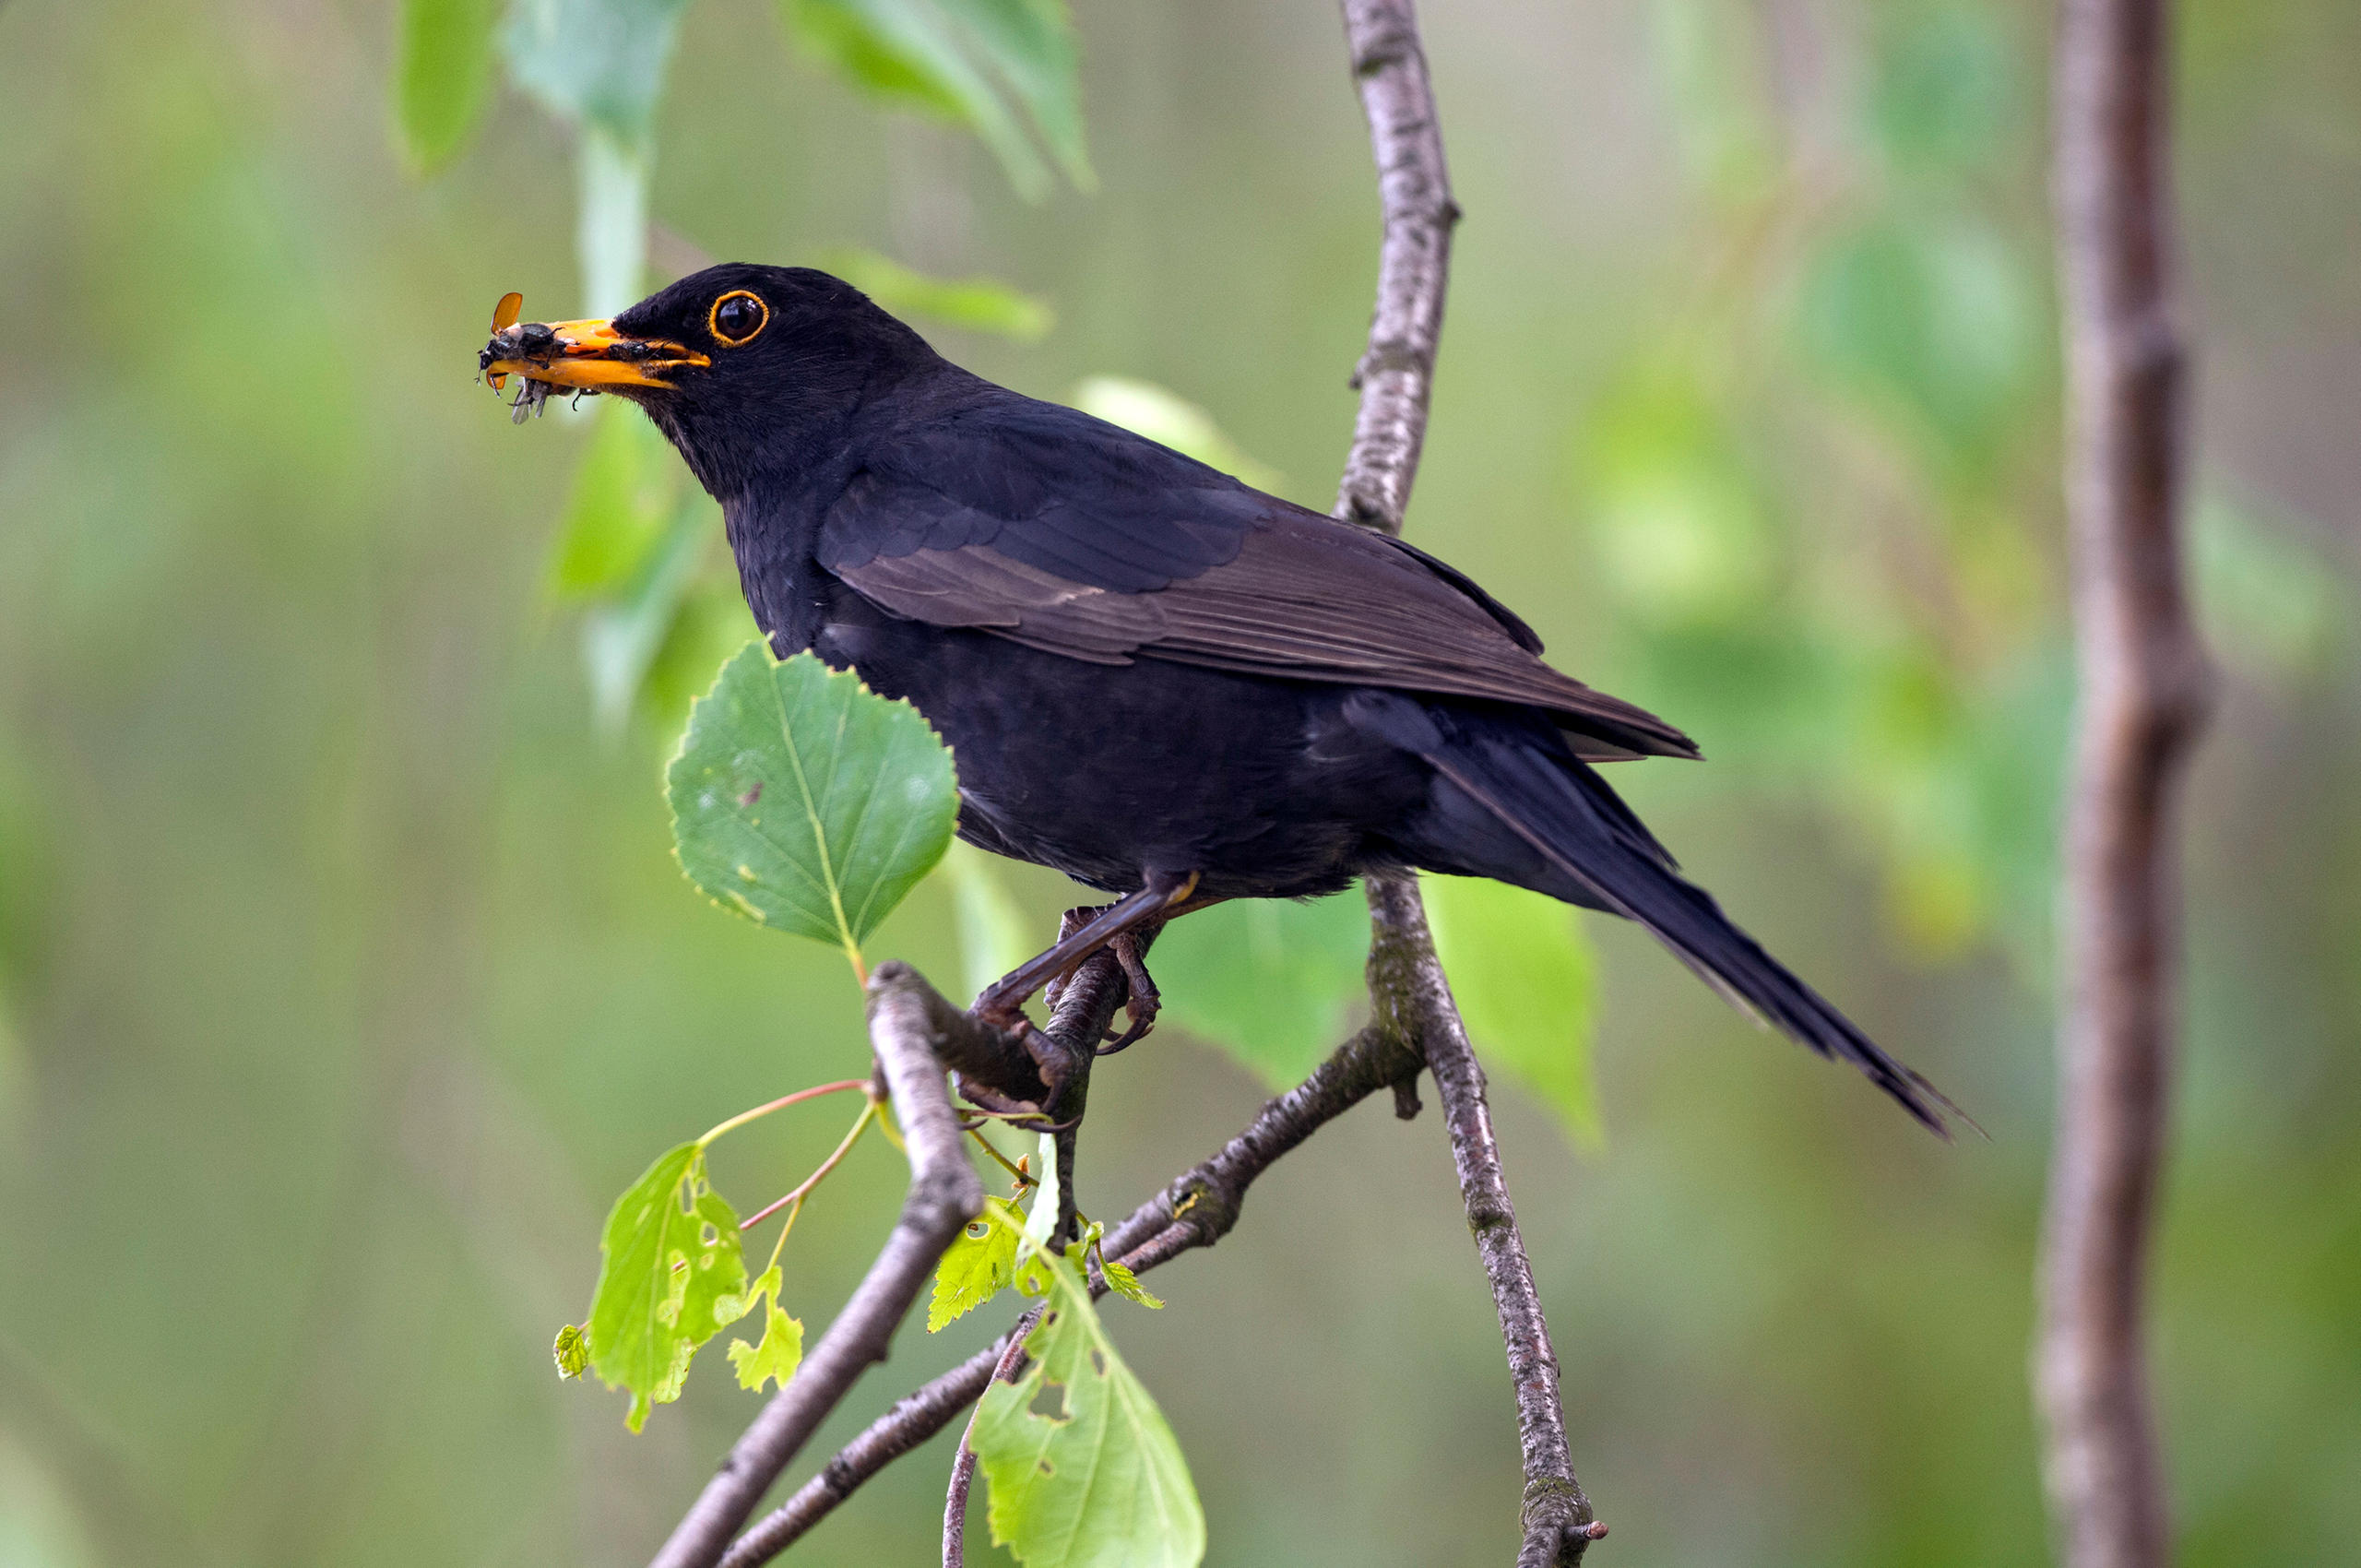 blackbird on branch with worm